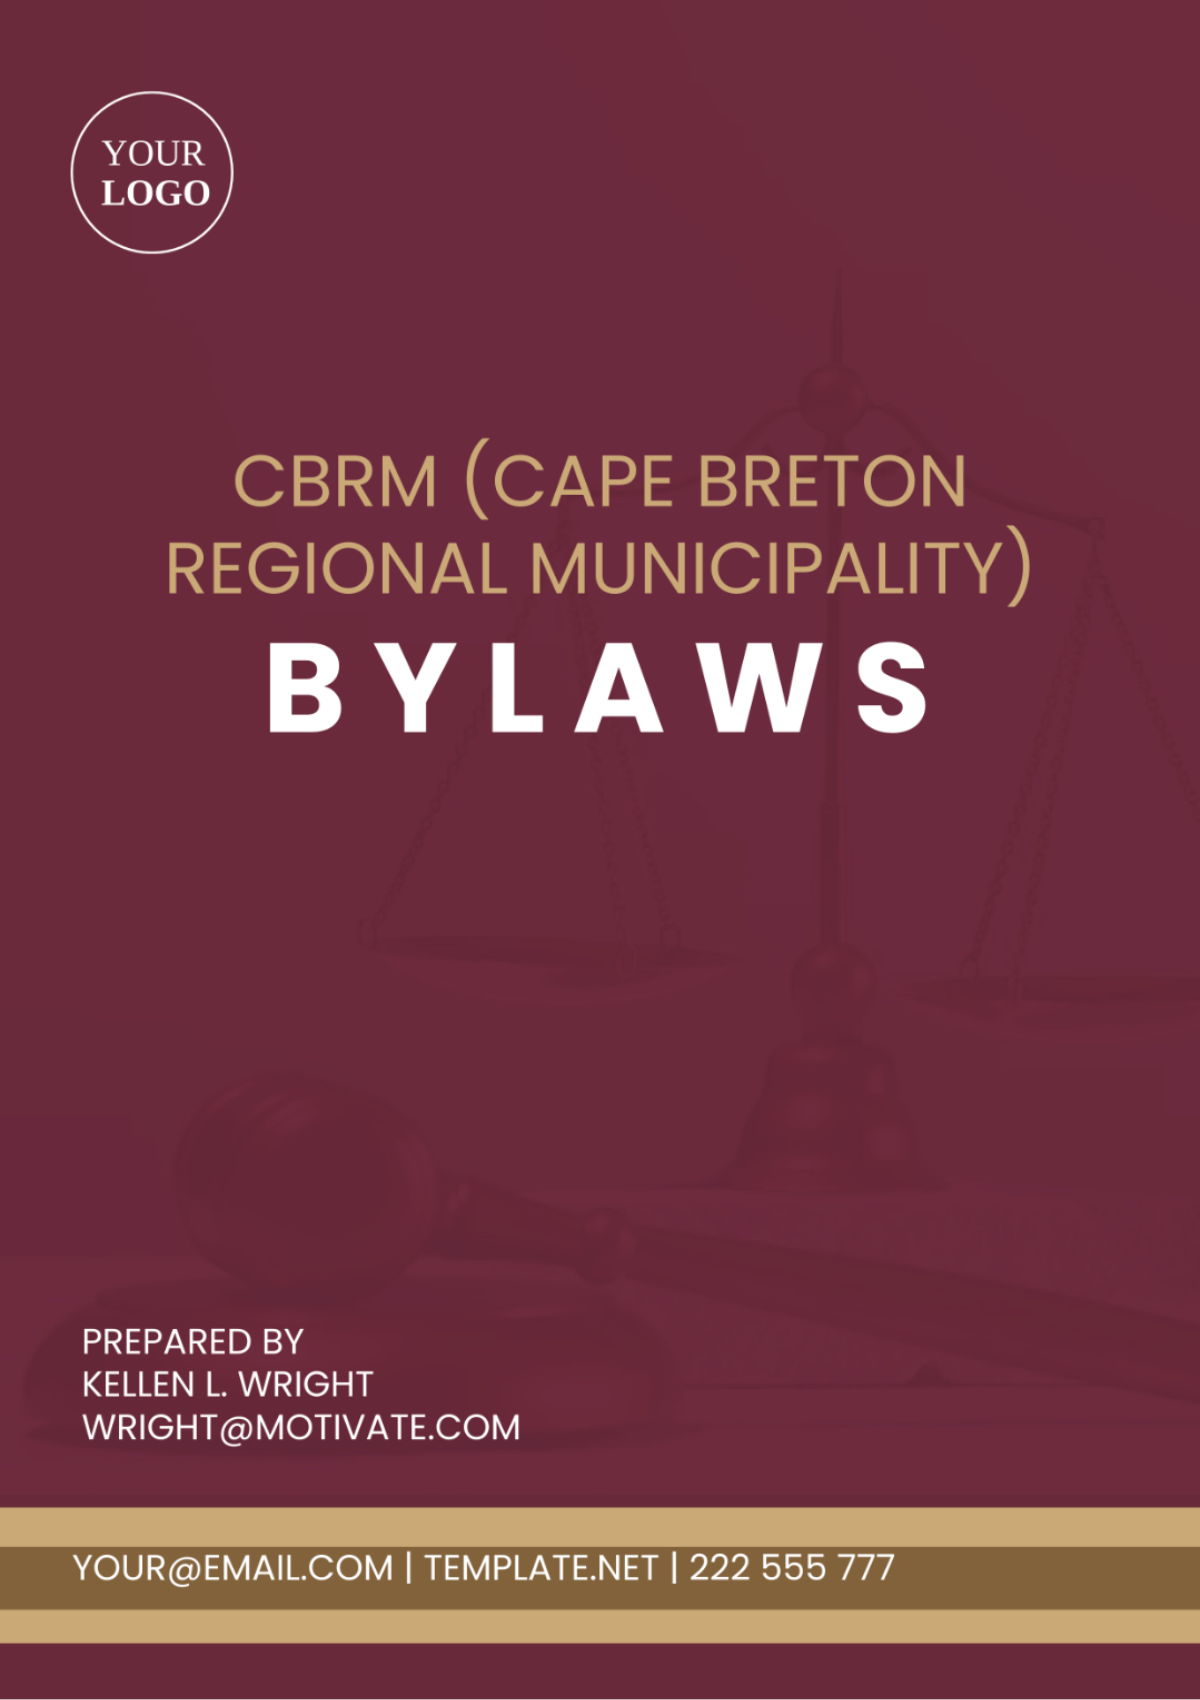 Free Cbrm(Cape Breton Regional Municipality) Bylaws Template